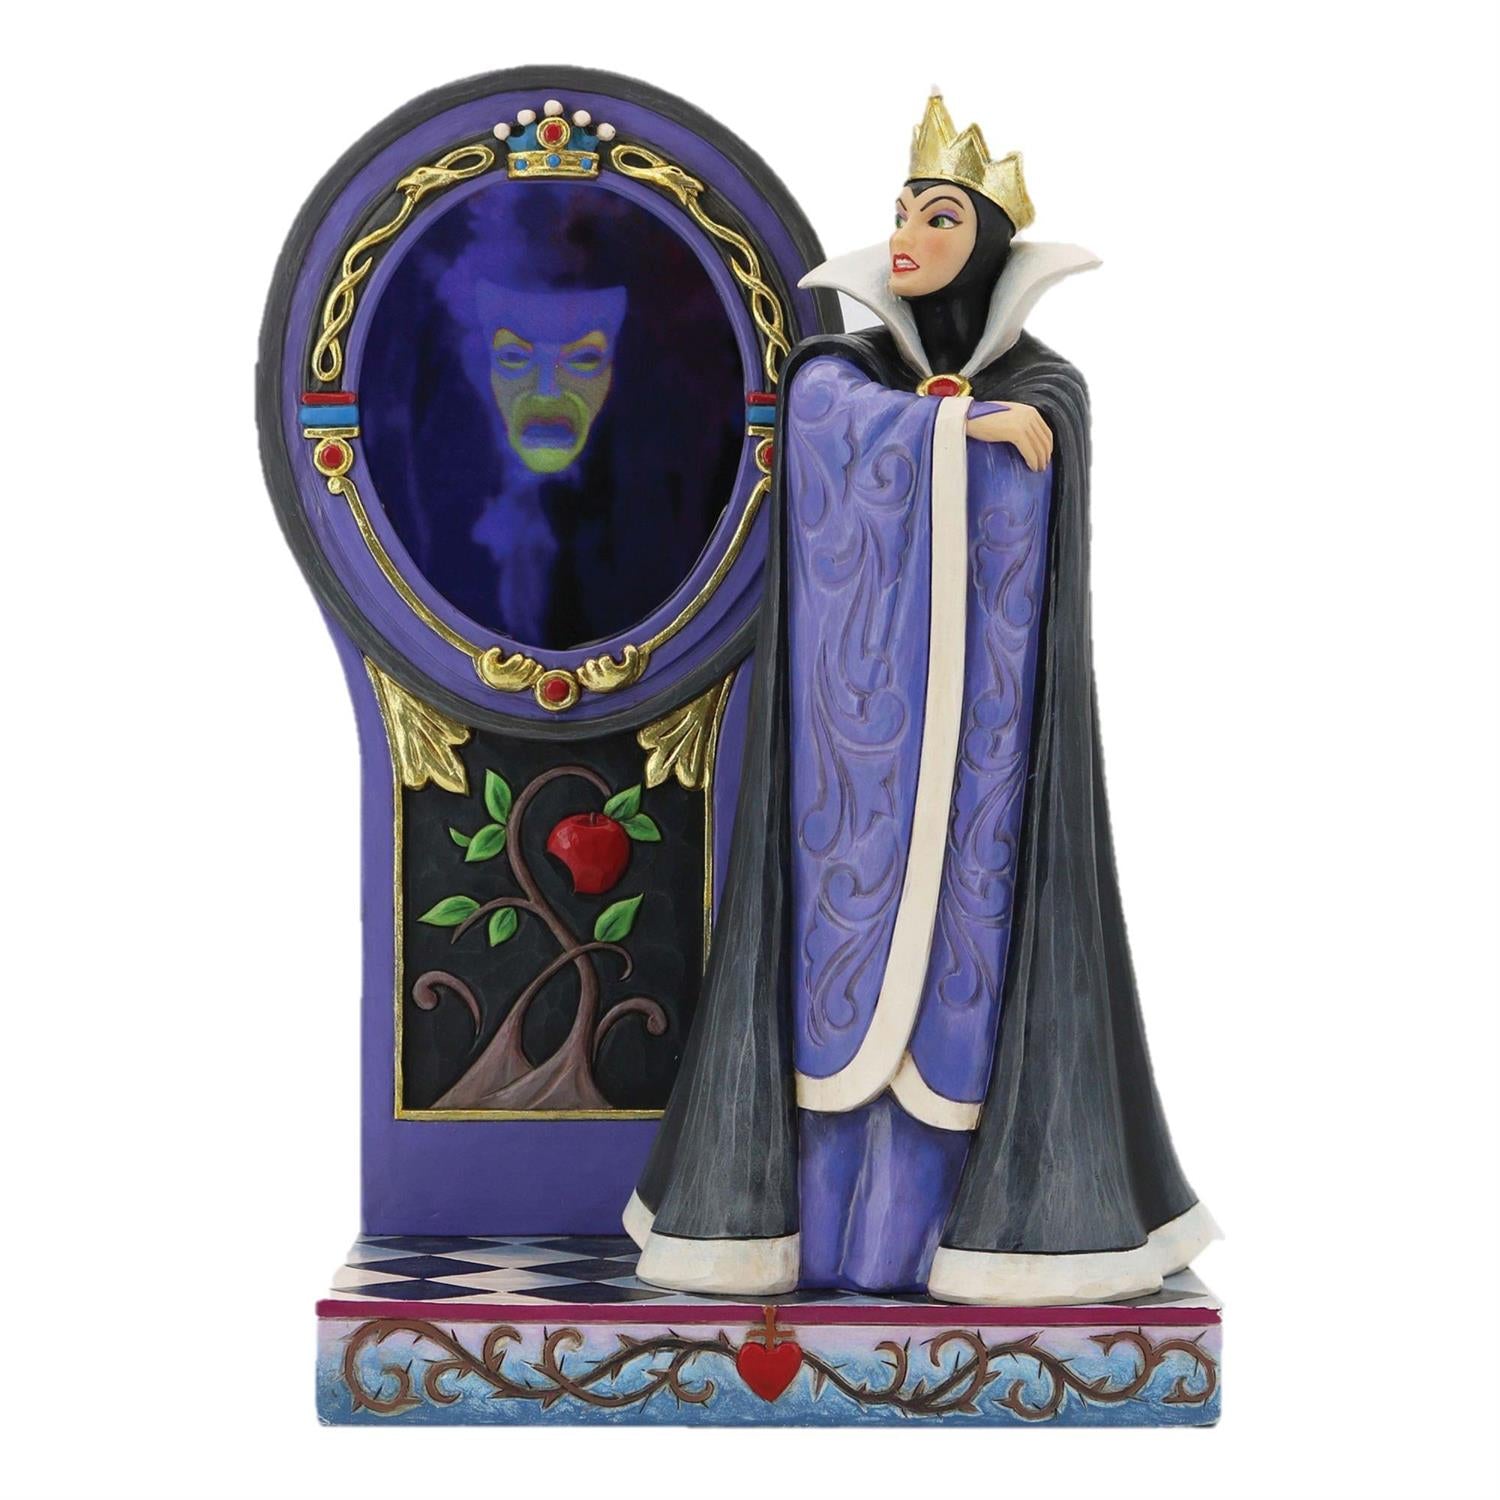 Magic Mirror, the Evil Queen 